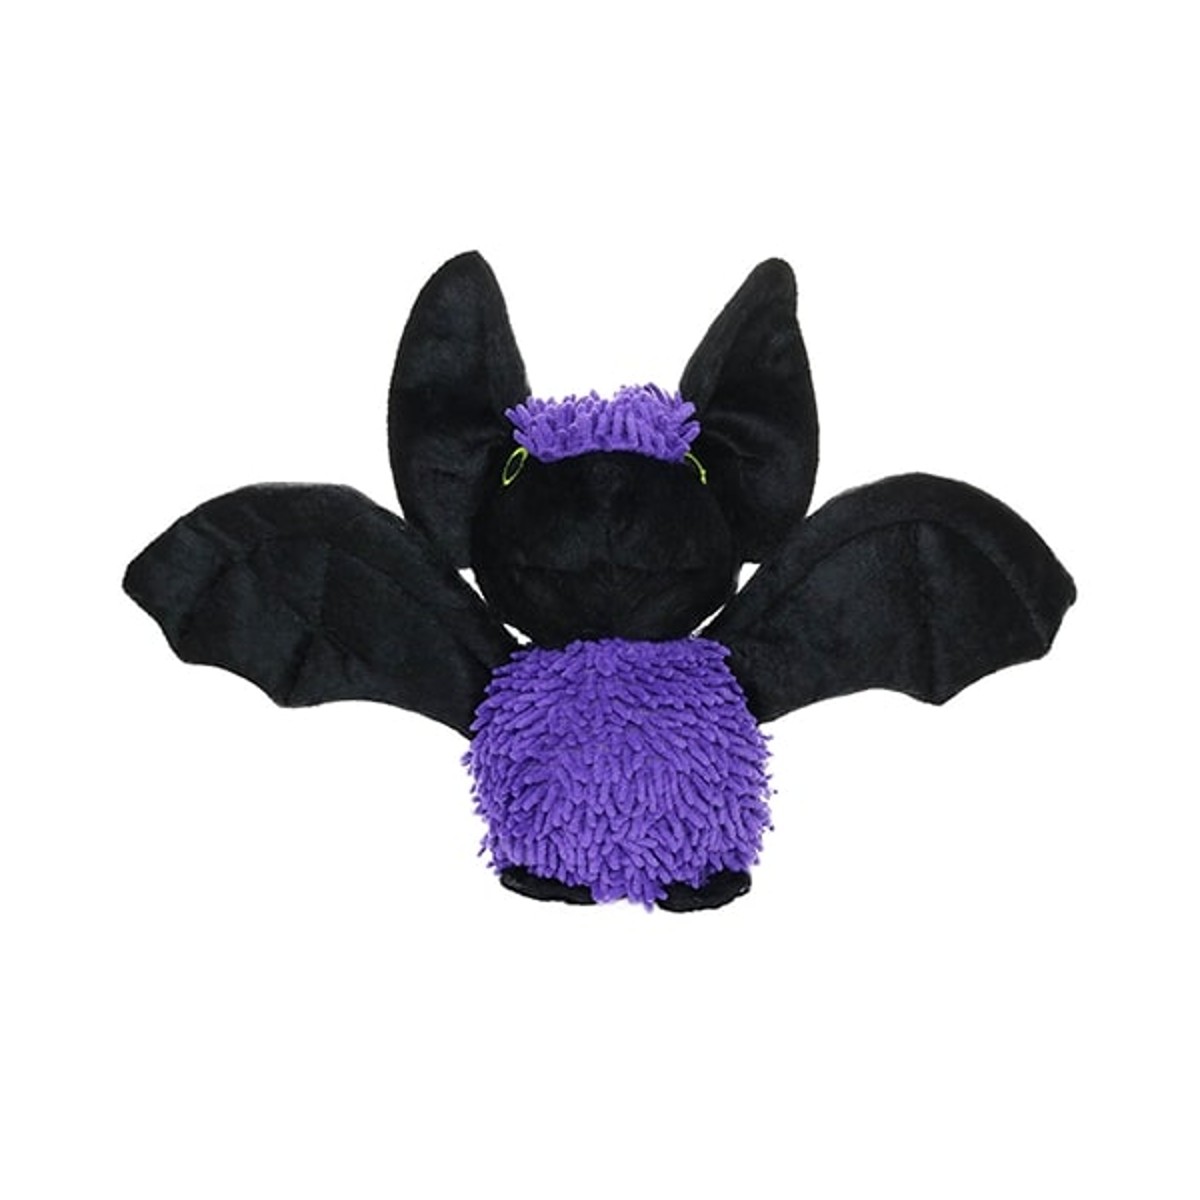 Mighty Halloween Microfiber Ball Dog Toy - Purple Bat